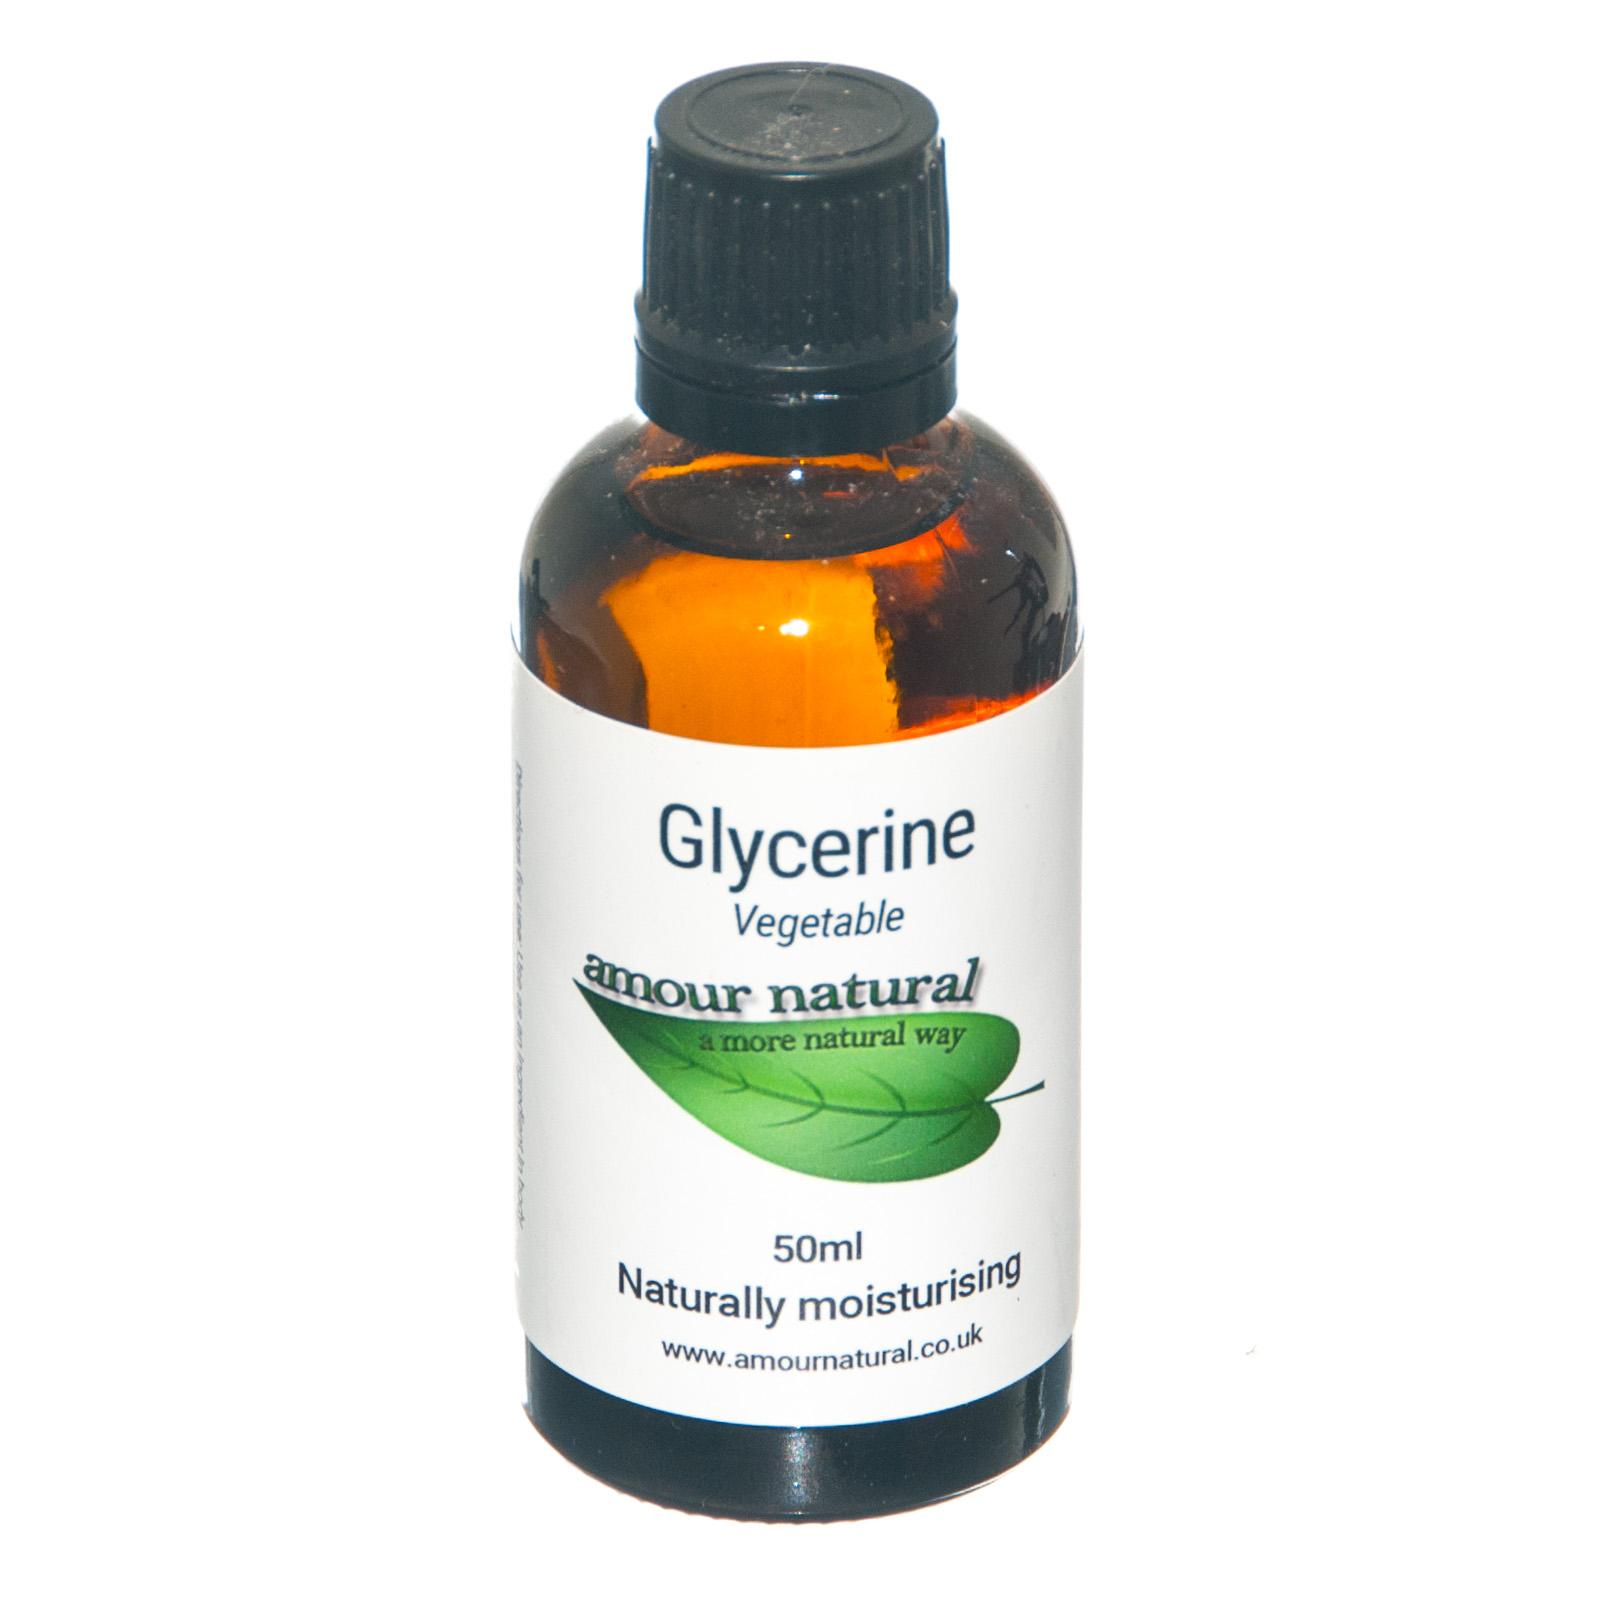 Glycerine (vegetable)